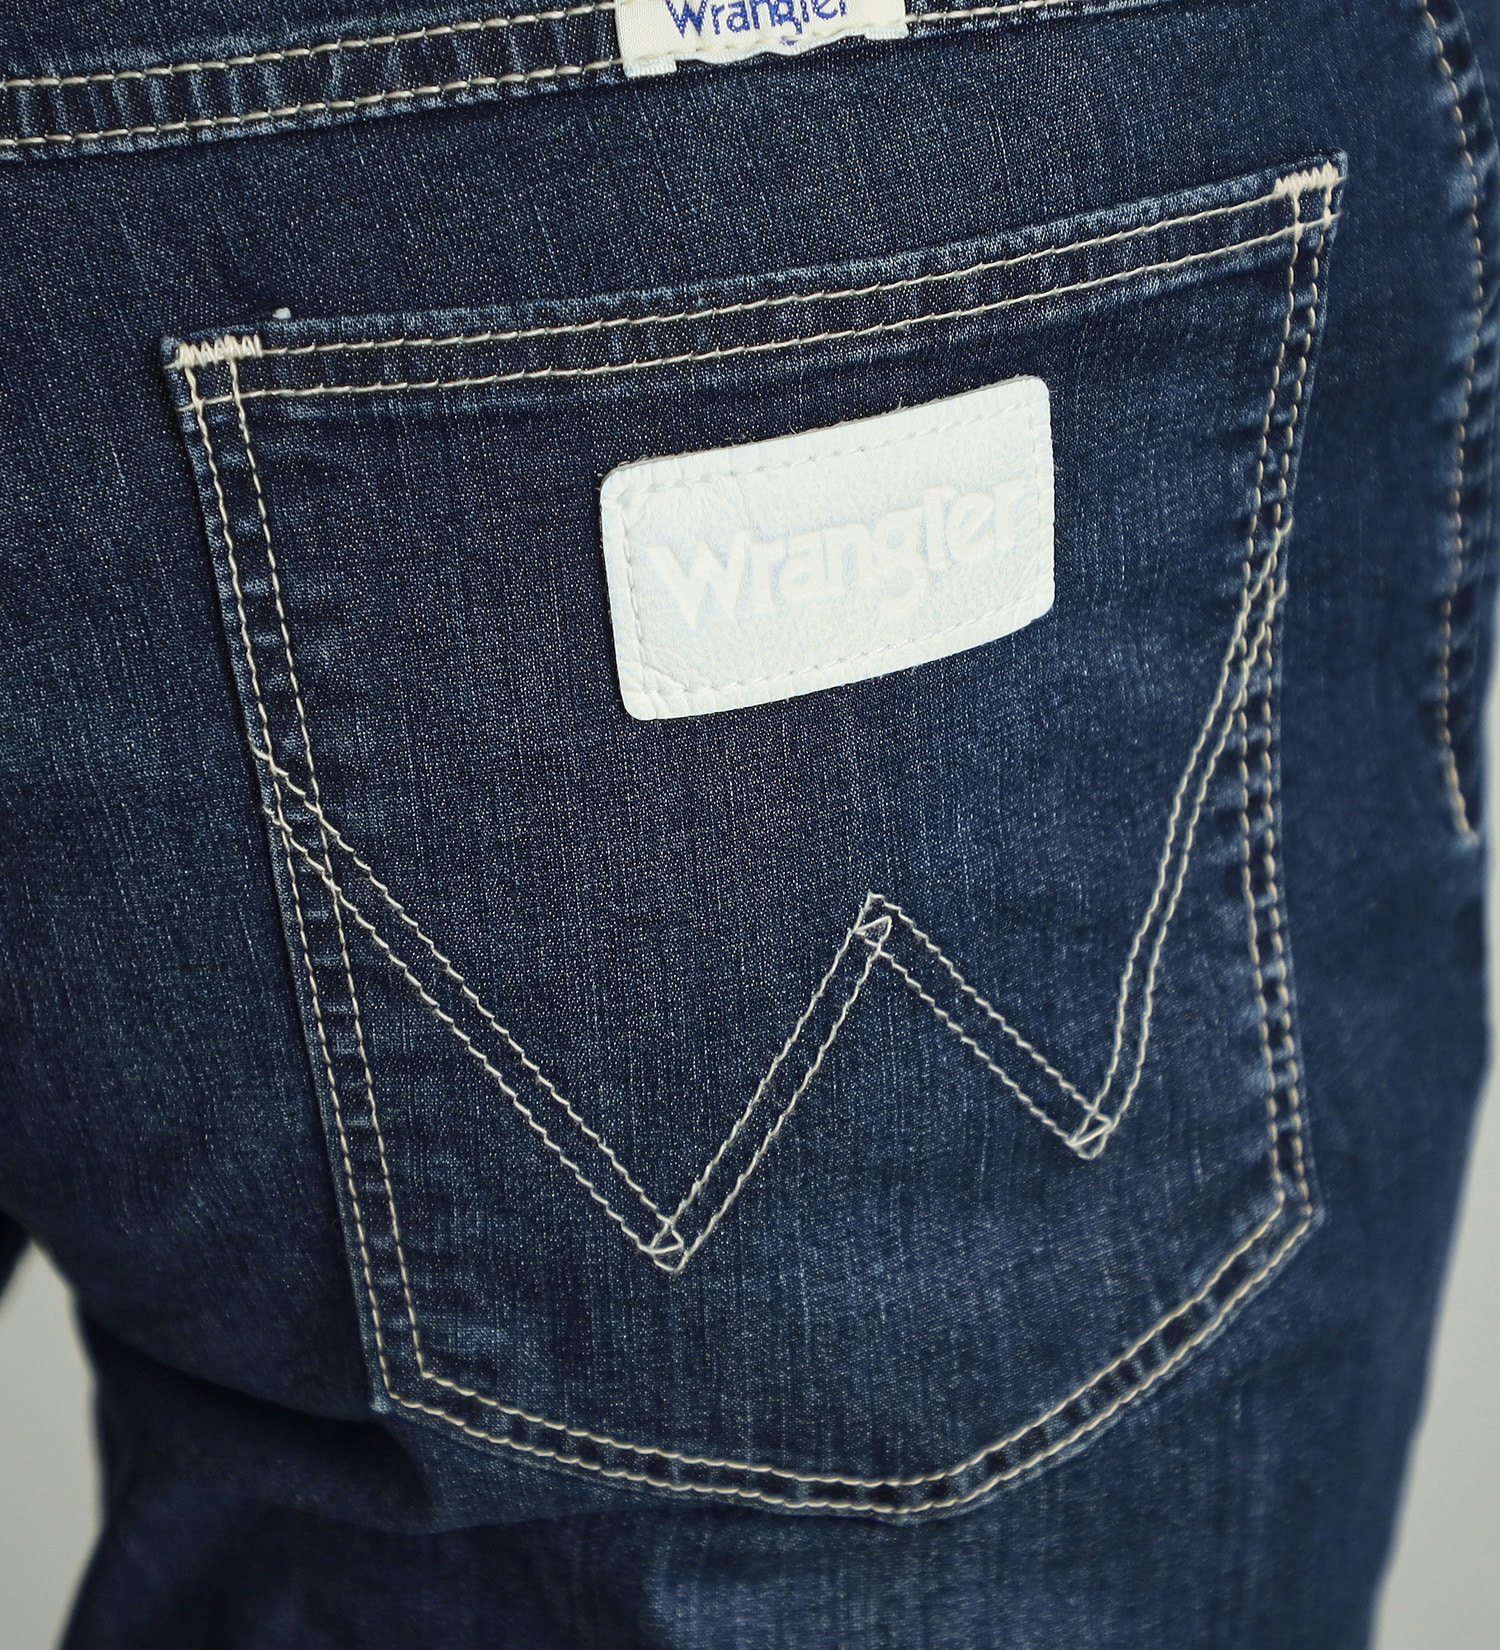 Wrangler(ラングラー)の【試着対象】【涼・COOL】ドライタッチショーツ|パンツ/デニムパンツ/メンズ|濃色ブルー